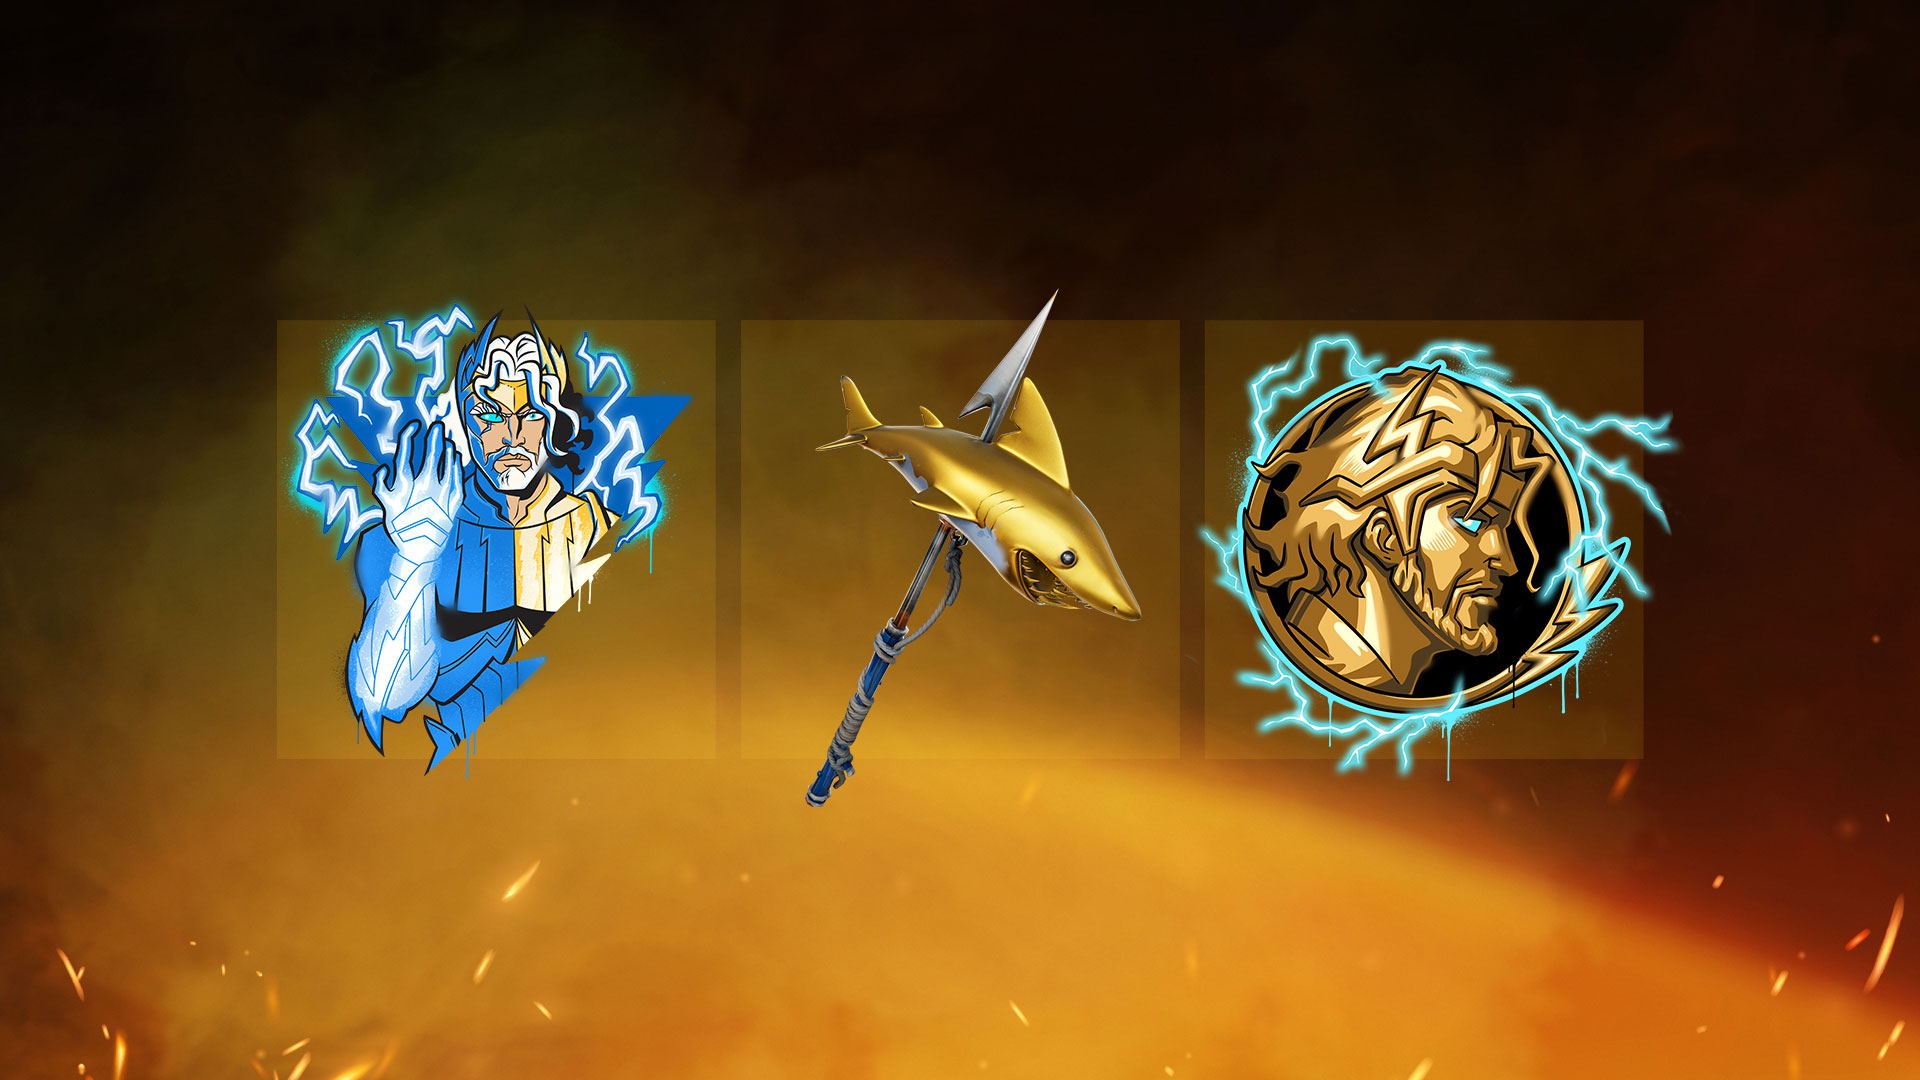 Lightning King, Gilded Vengeance, and Zeus Medallion Floor is Lava rewards